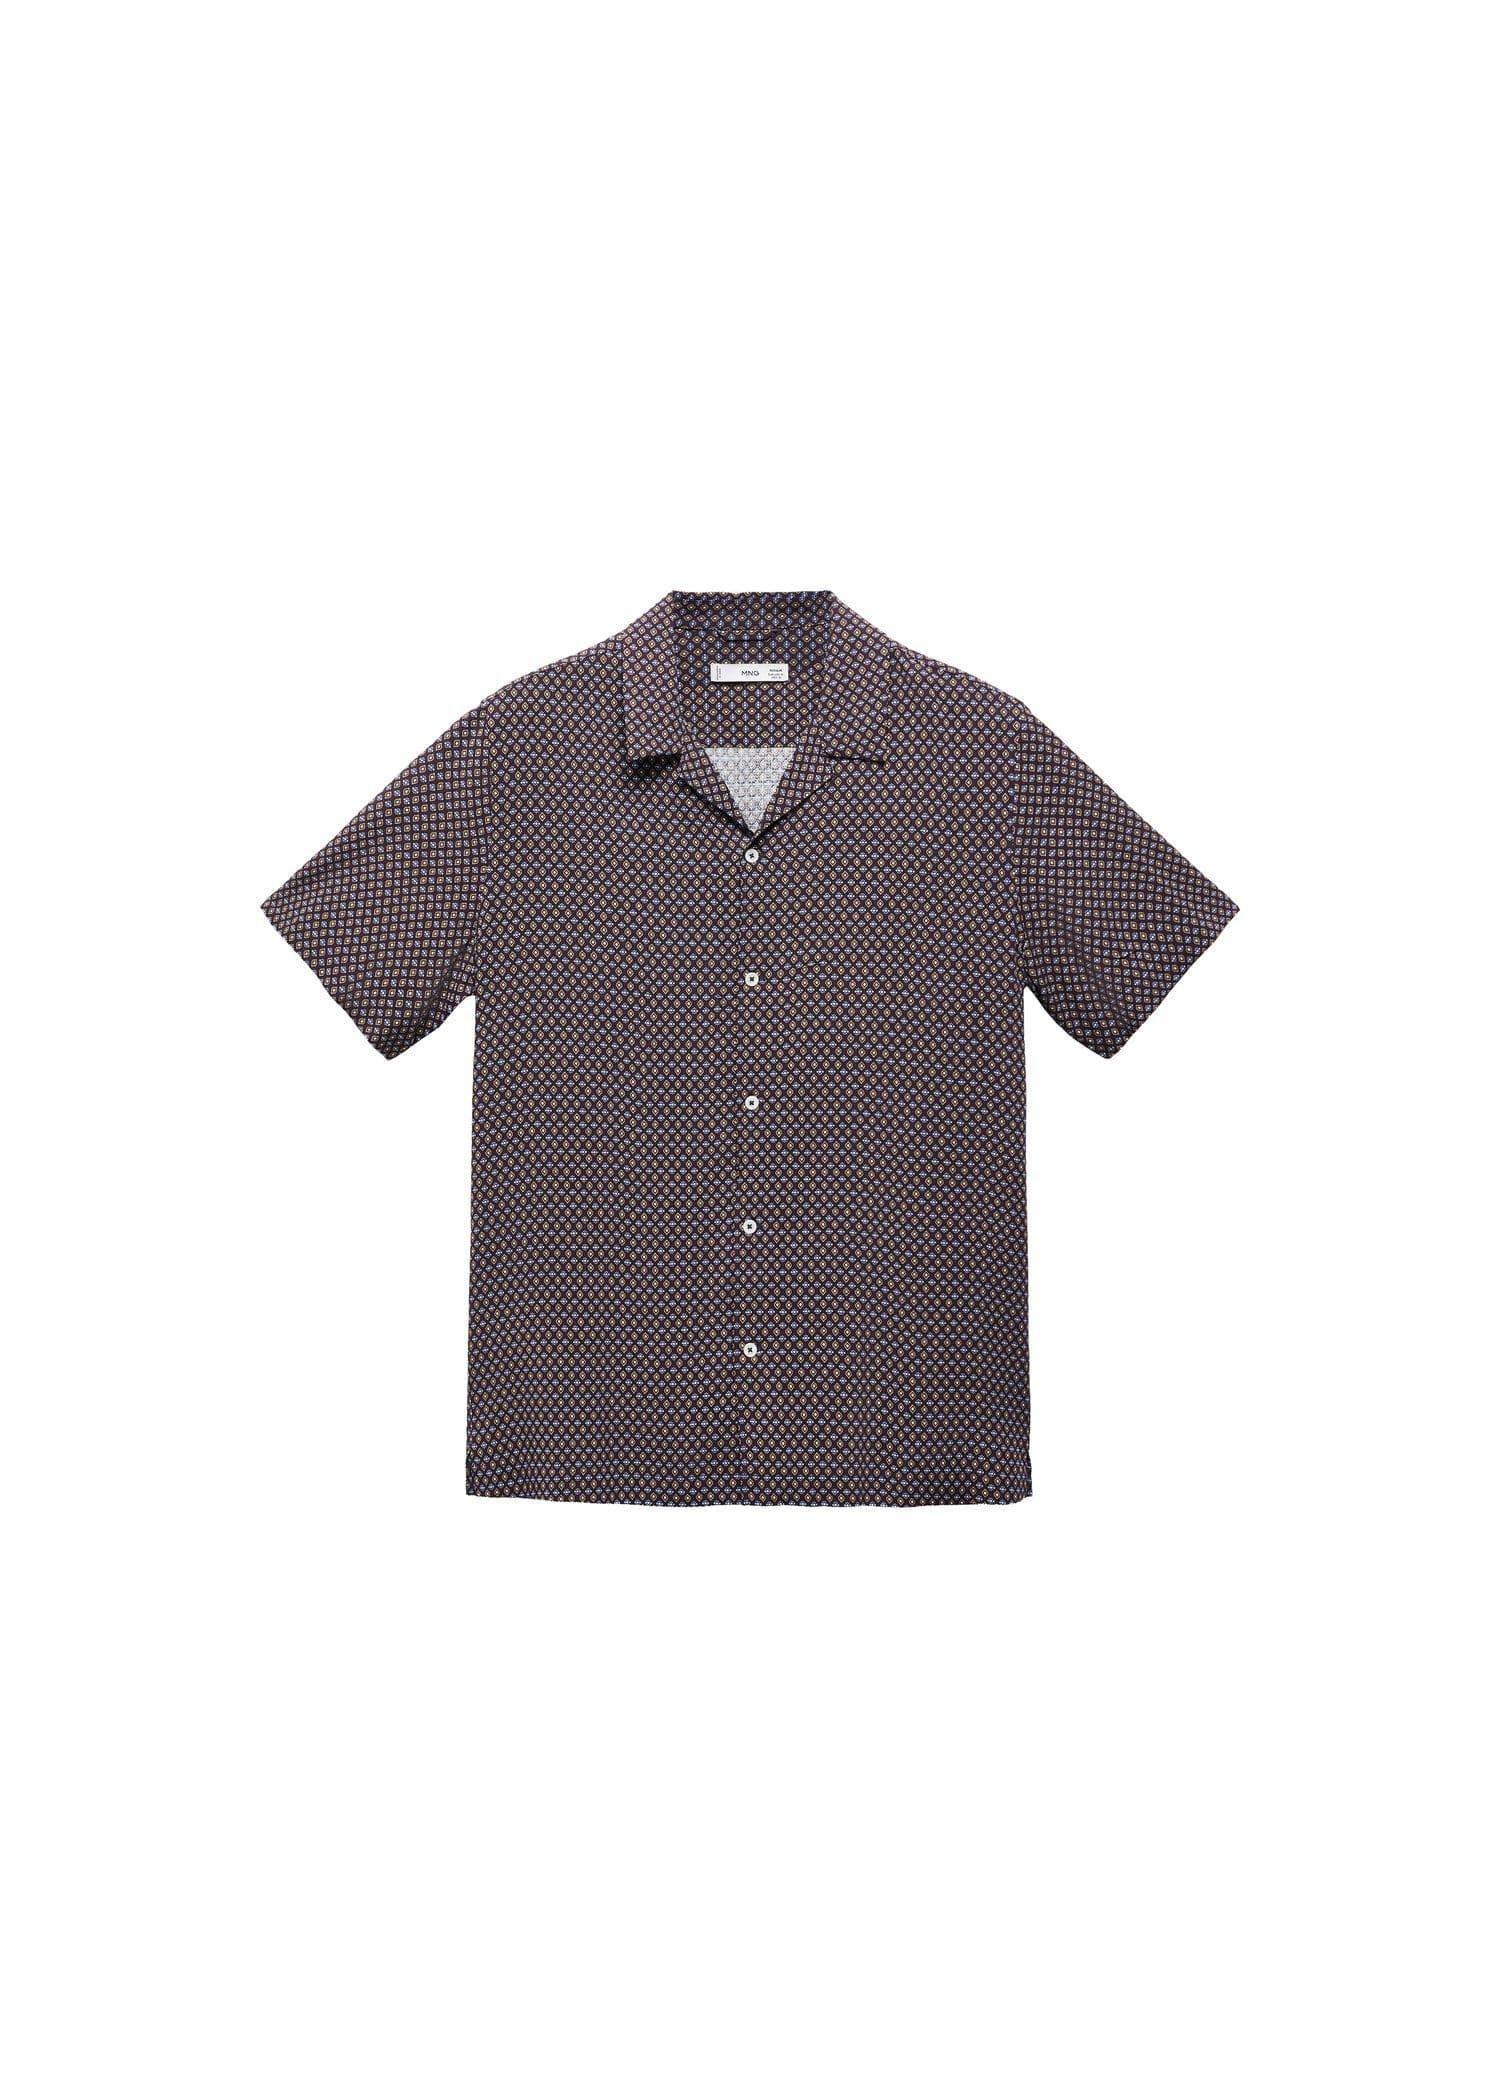 Mango - Navy Patterned Short-Sleeved Shirt